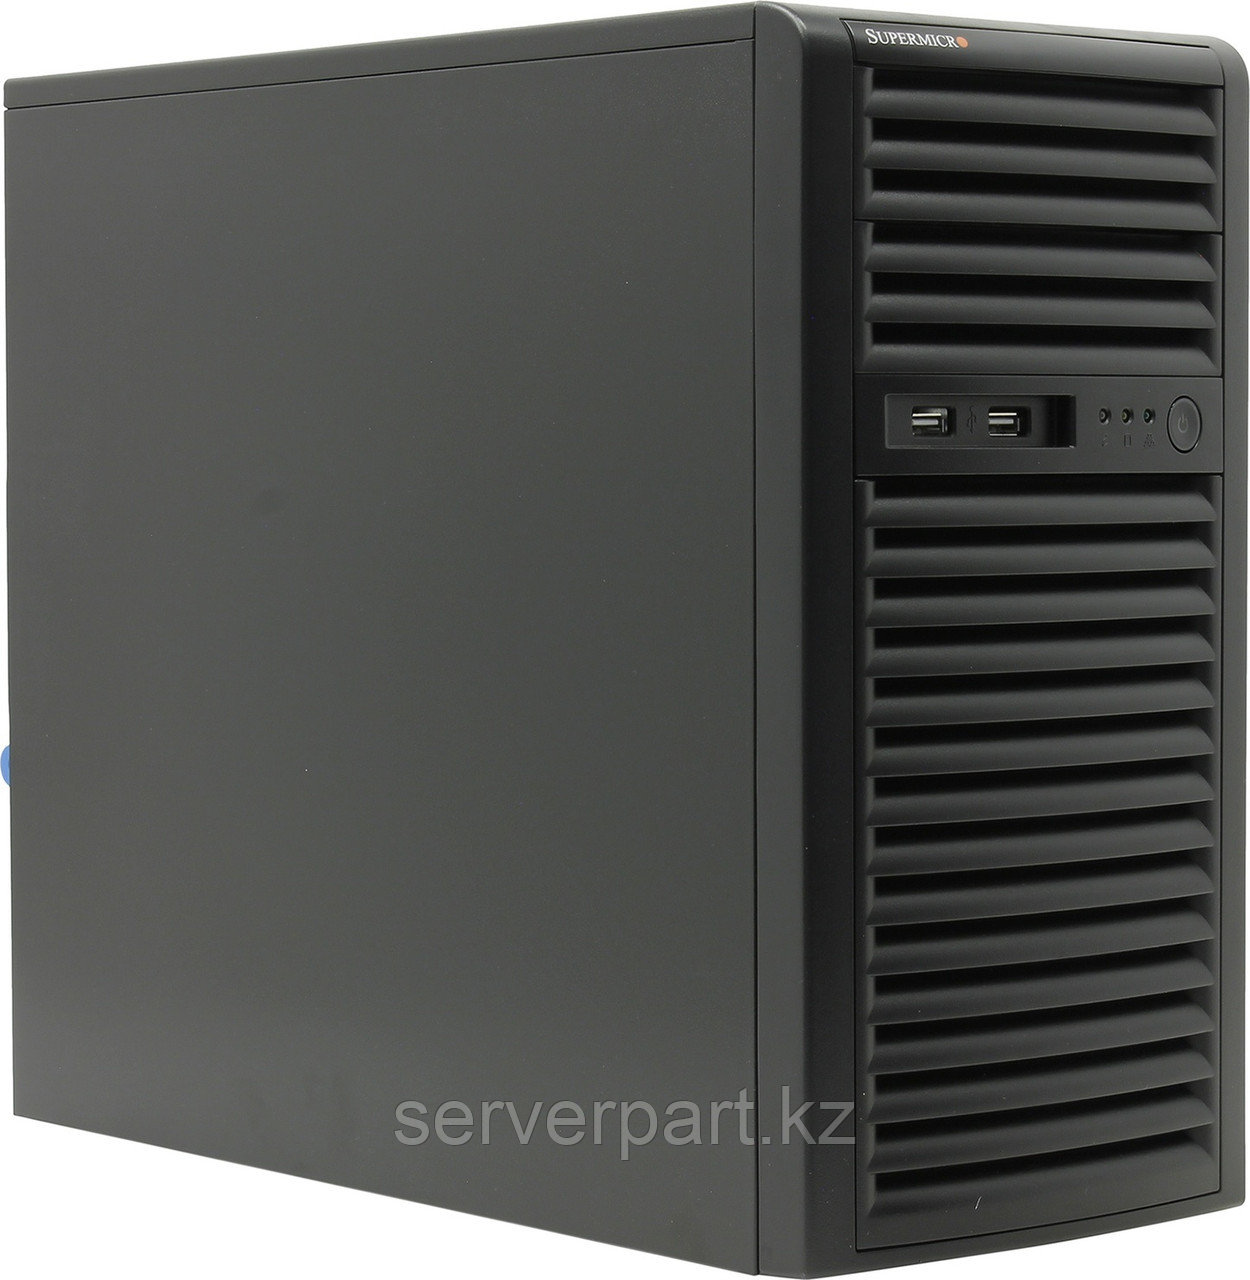 Сервер Supermicro 5039D Tower/4-core intel xeon E3-1220v6 3GHz/64GB UDIMM nECC/1x480GB SSD MU Hyb